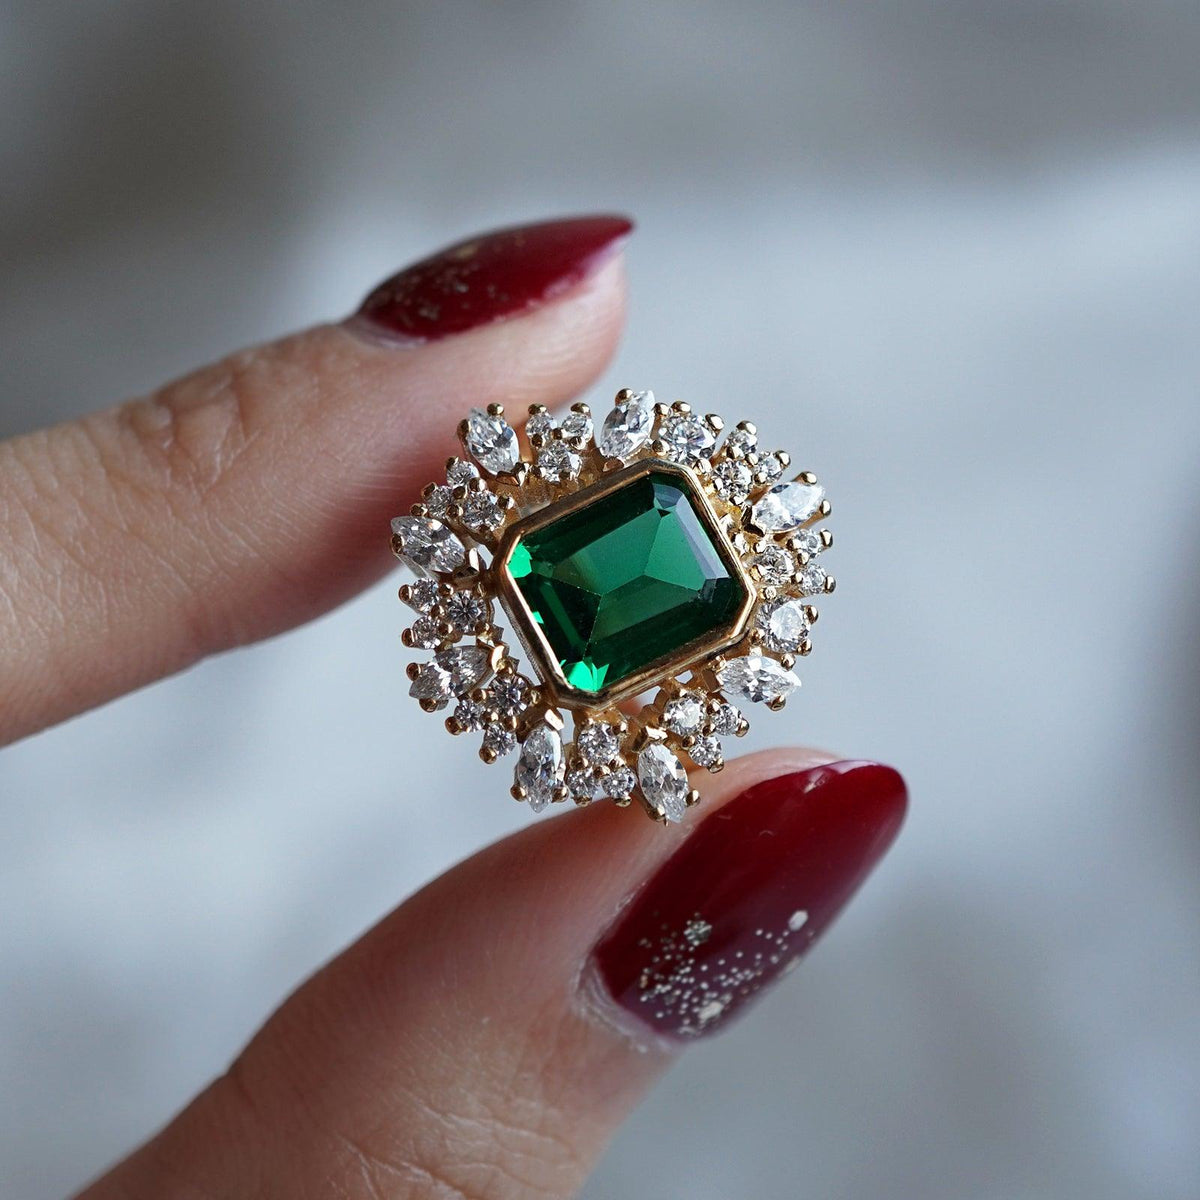 Forbidden Garden Emerald Diamond Ring in 14K and 18K Gold